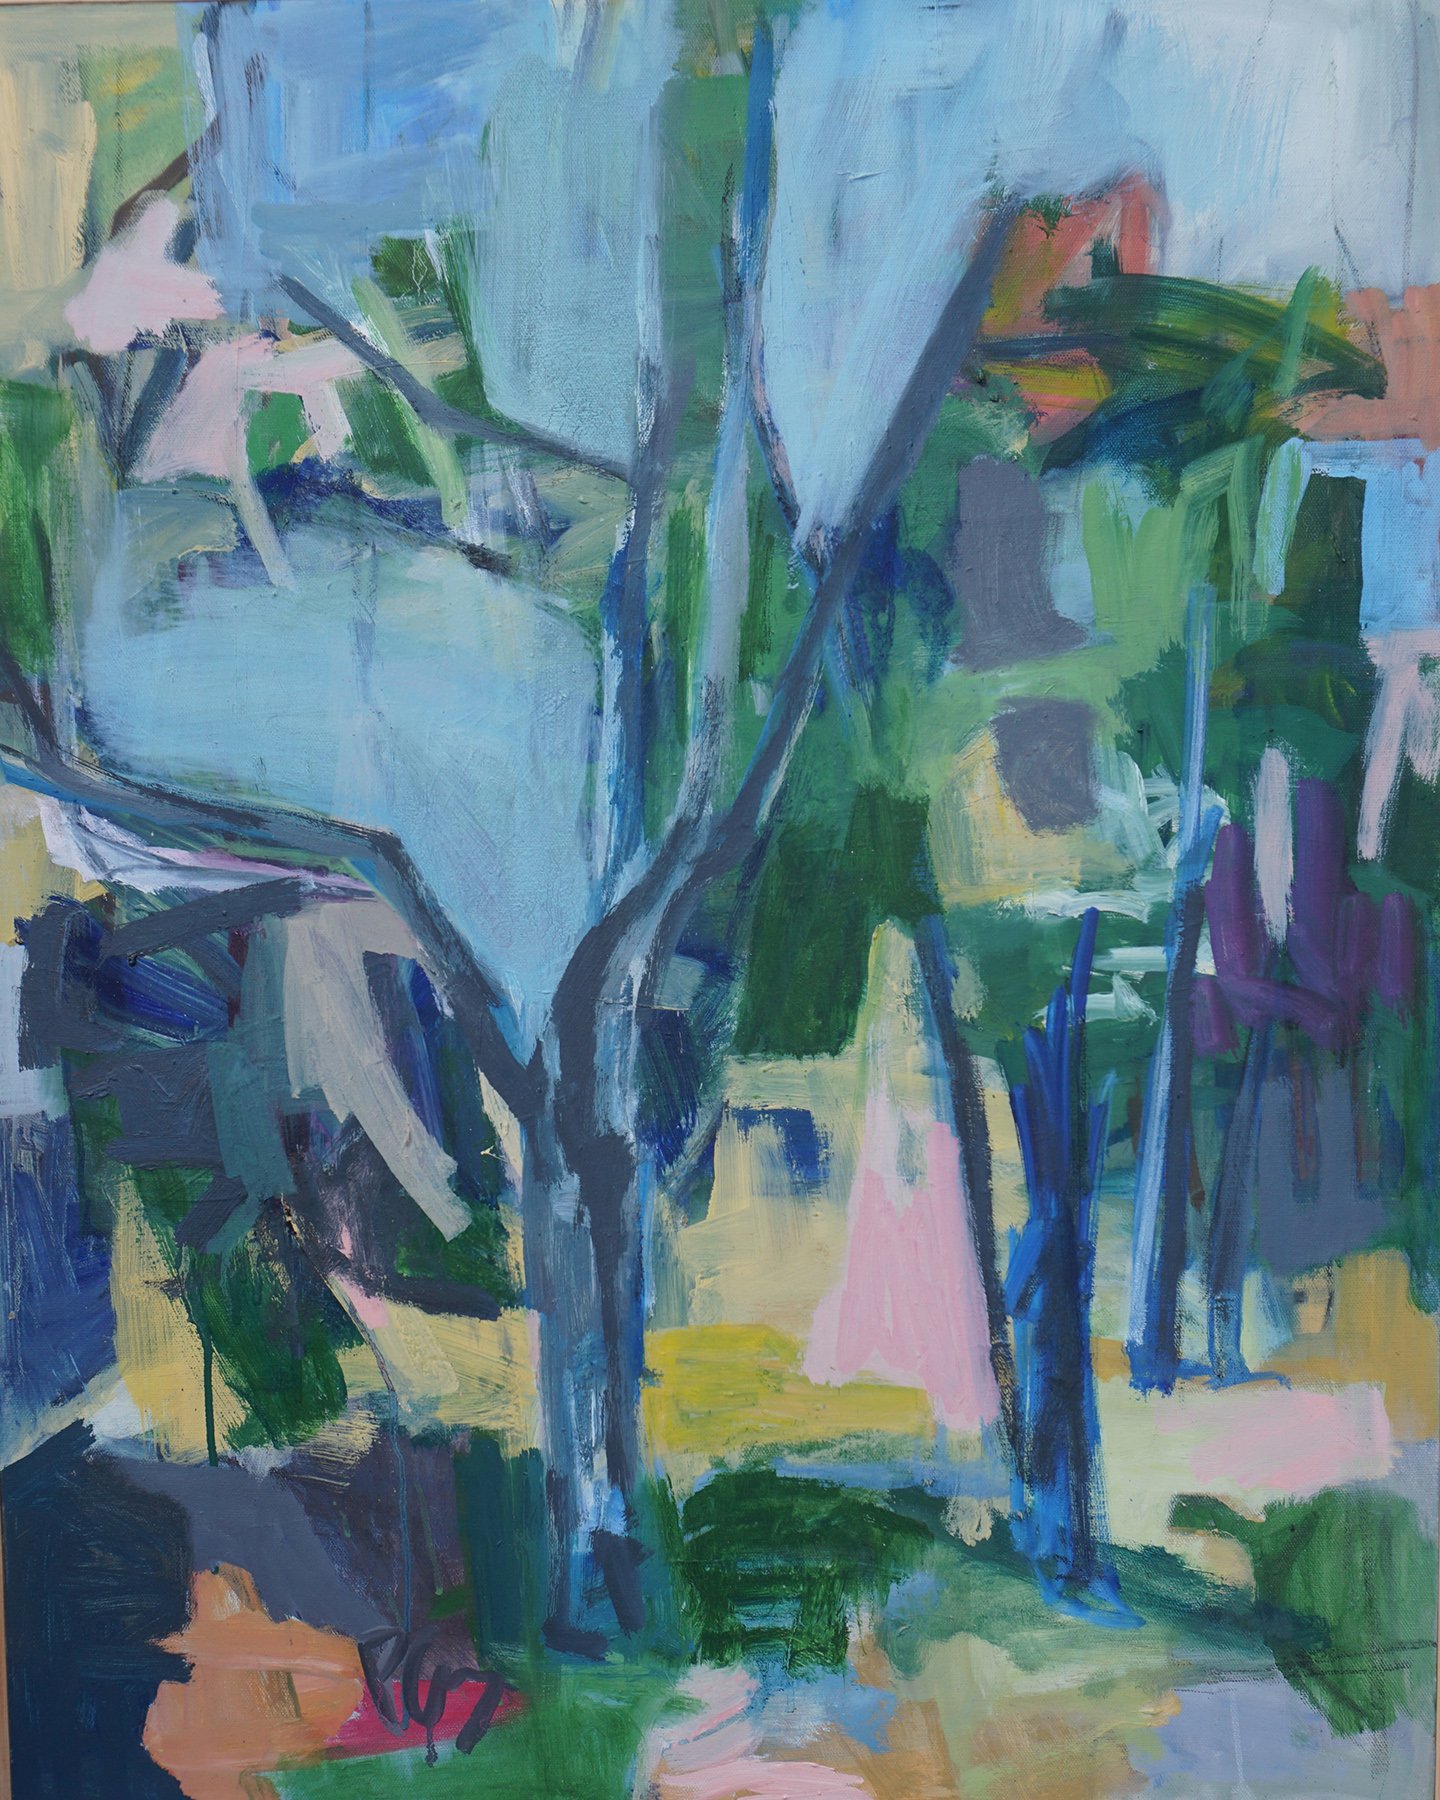    Birch Trees,   30x24”, oil on canvas   